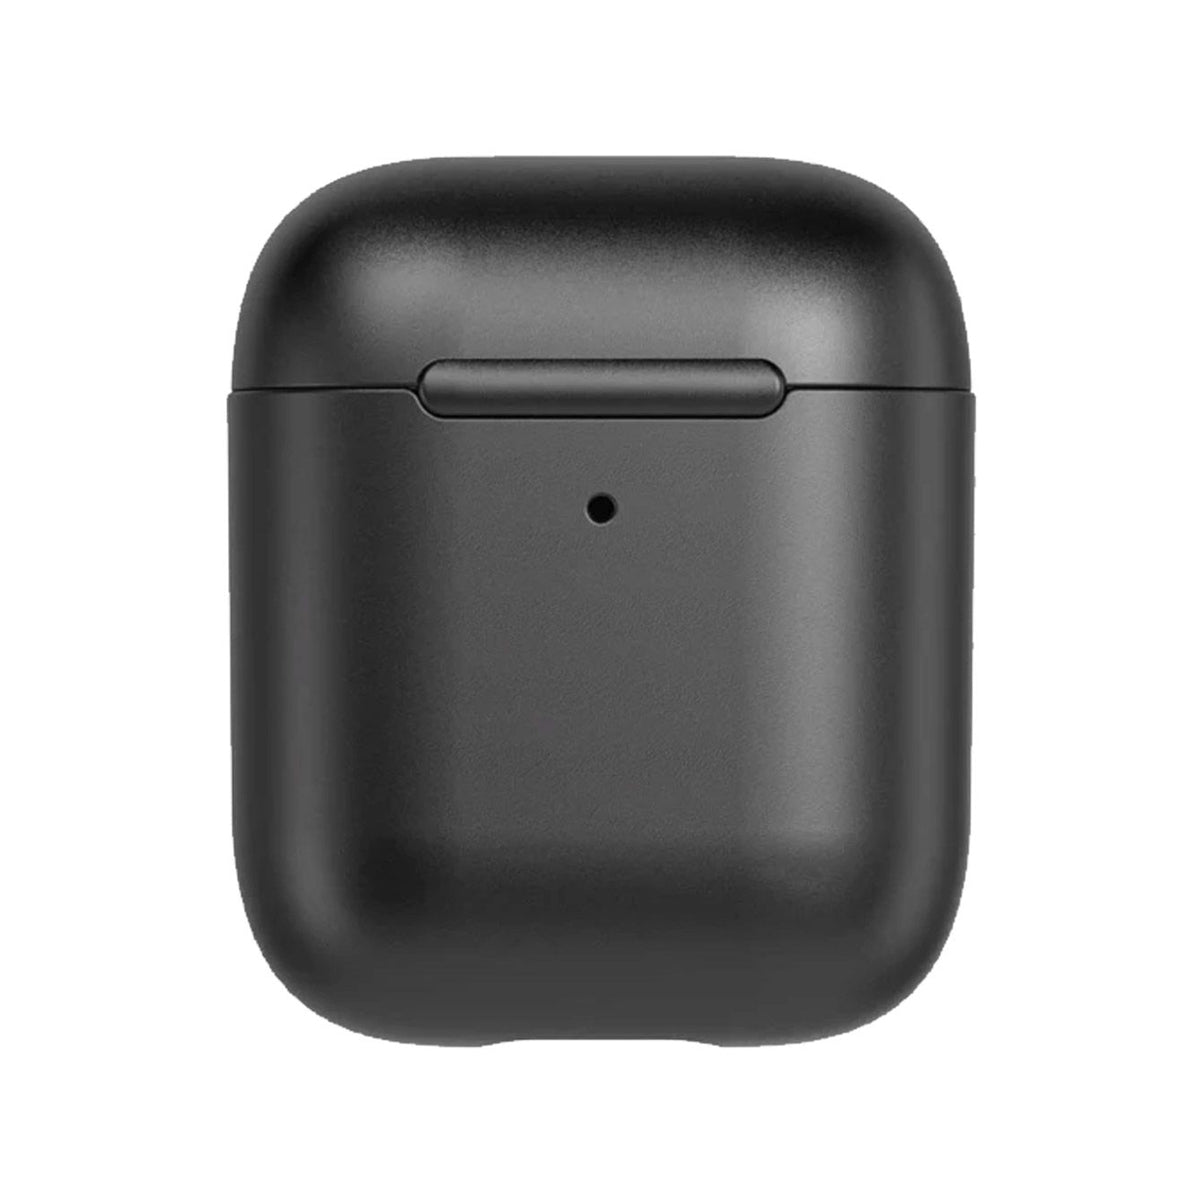 Tech21 Studio Colour Case for Apple AirPods - Black.